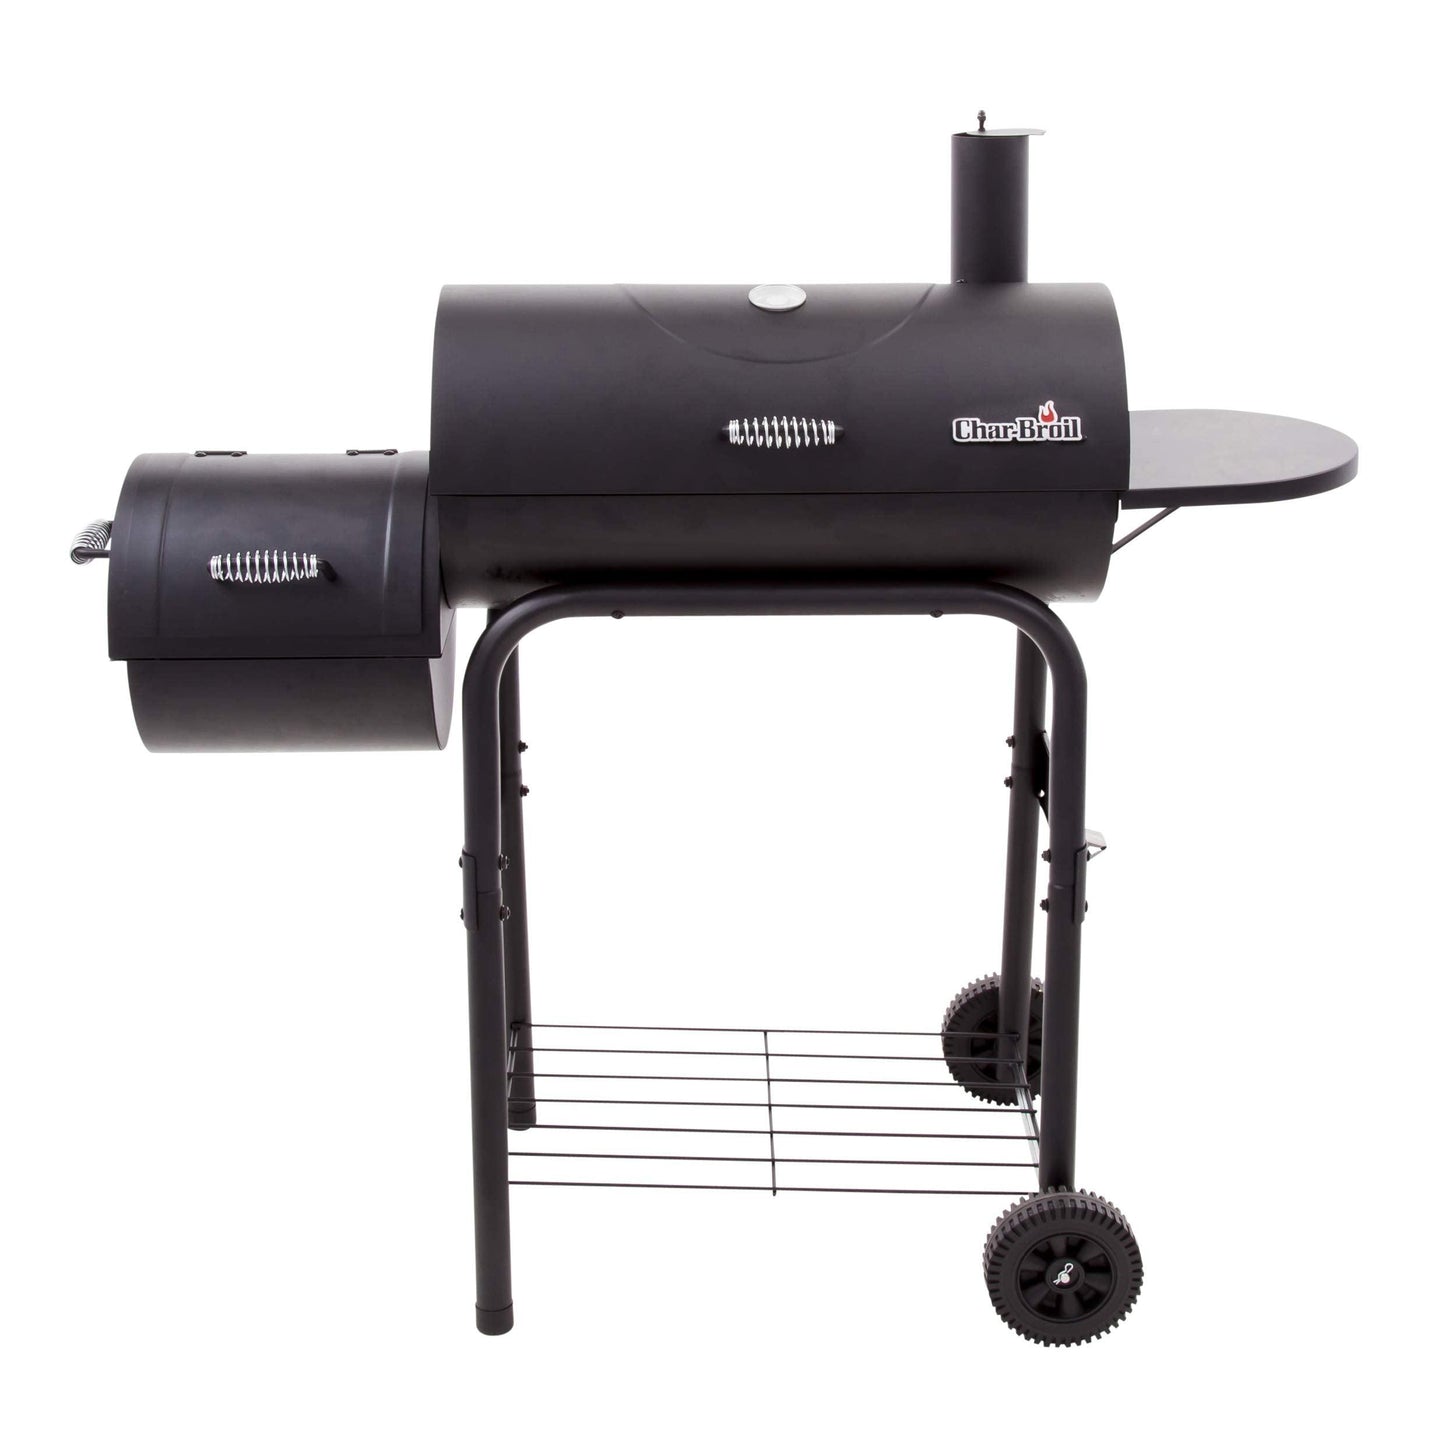 Char-Broil 12201570-A1 American Gourmet Offset Smoker, Black,Standard - CookCave